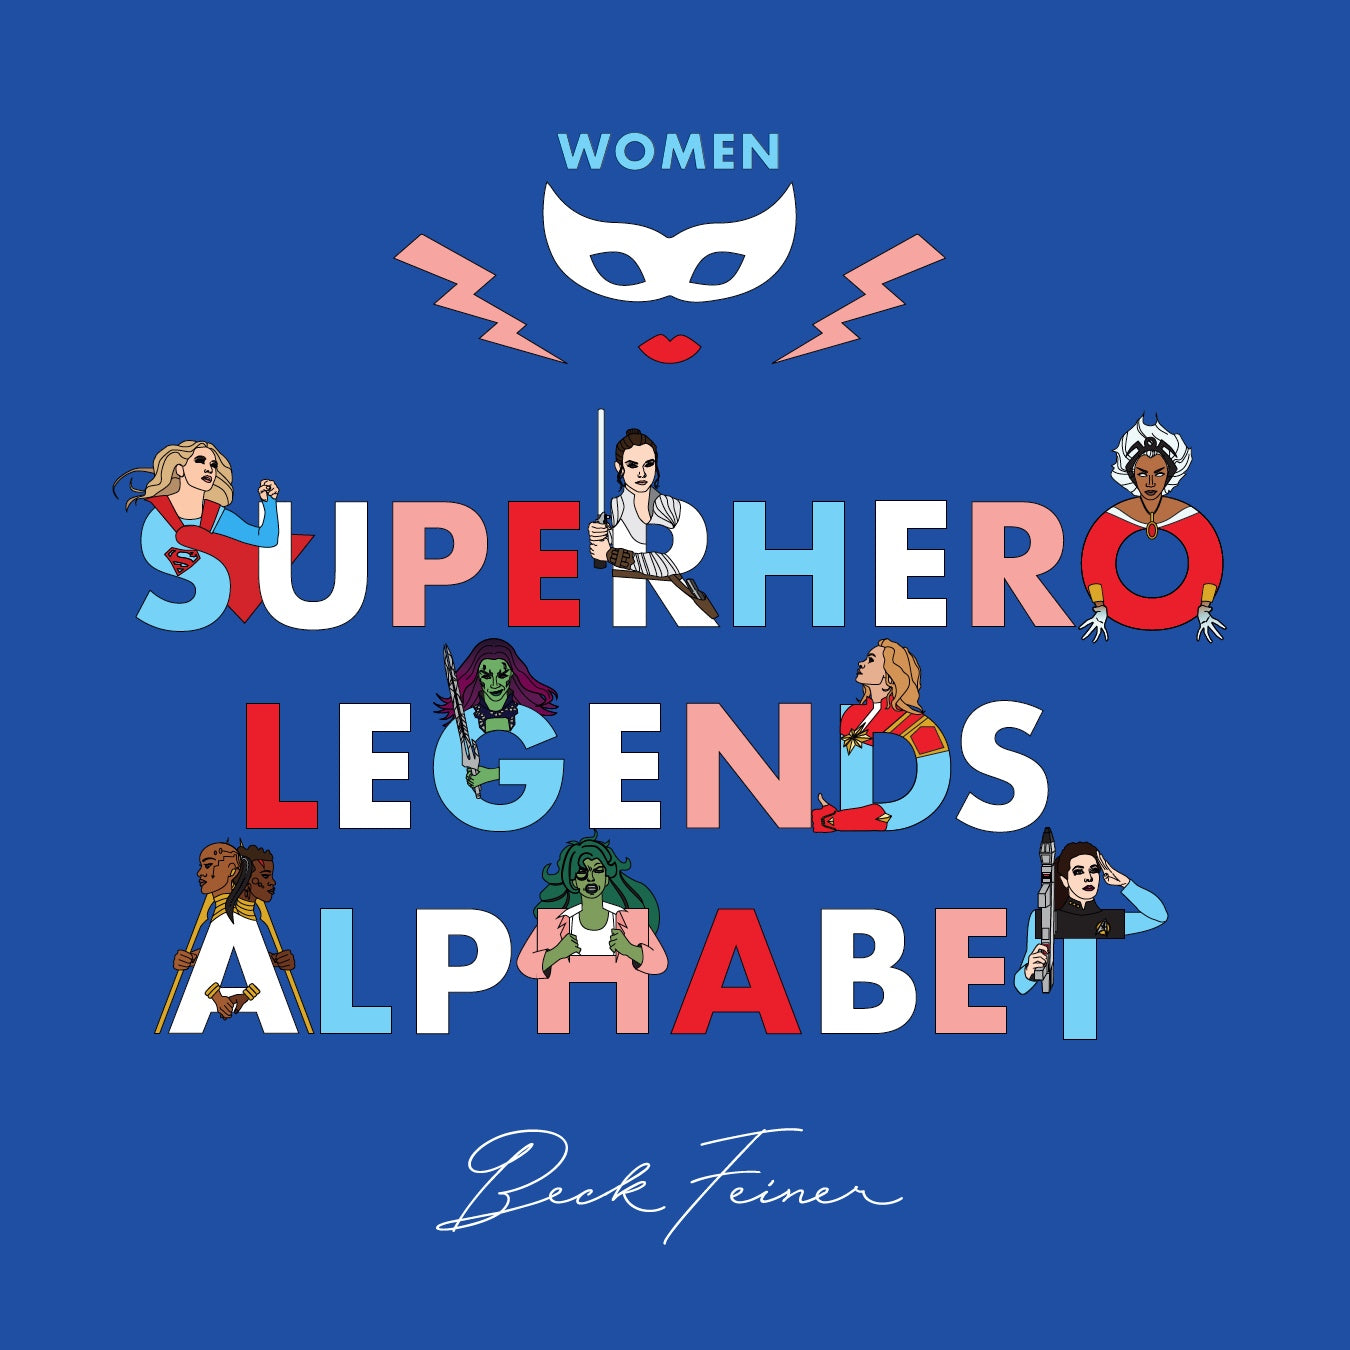 Women Superhero Legends Alphabet Book